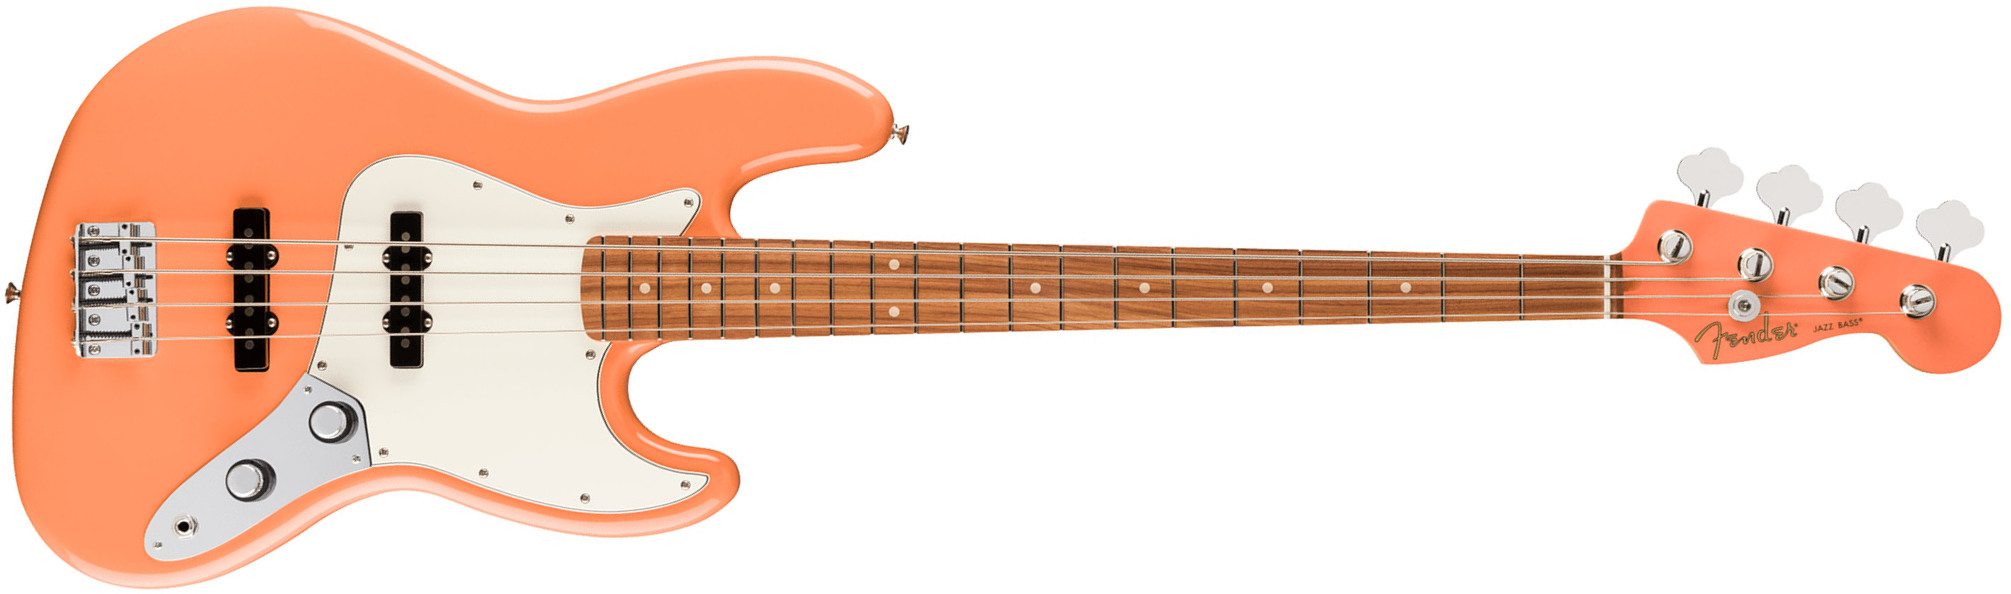 Fender Jazz Bass Player Mex Ltd Pf - Pacific Peach - Basse Électrique Solid Body - Main picture